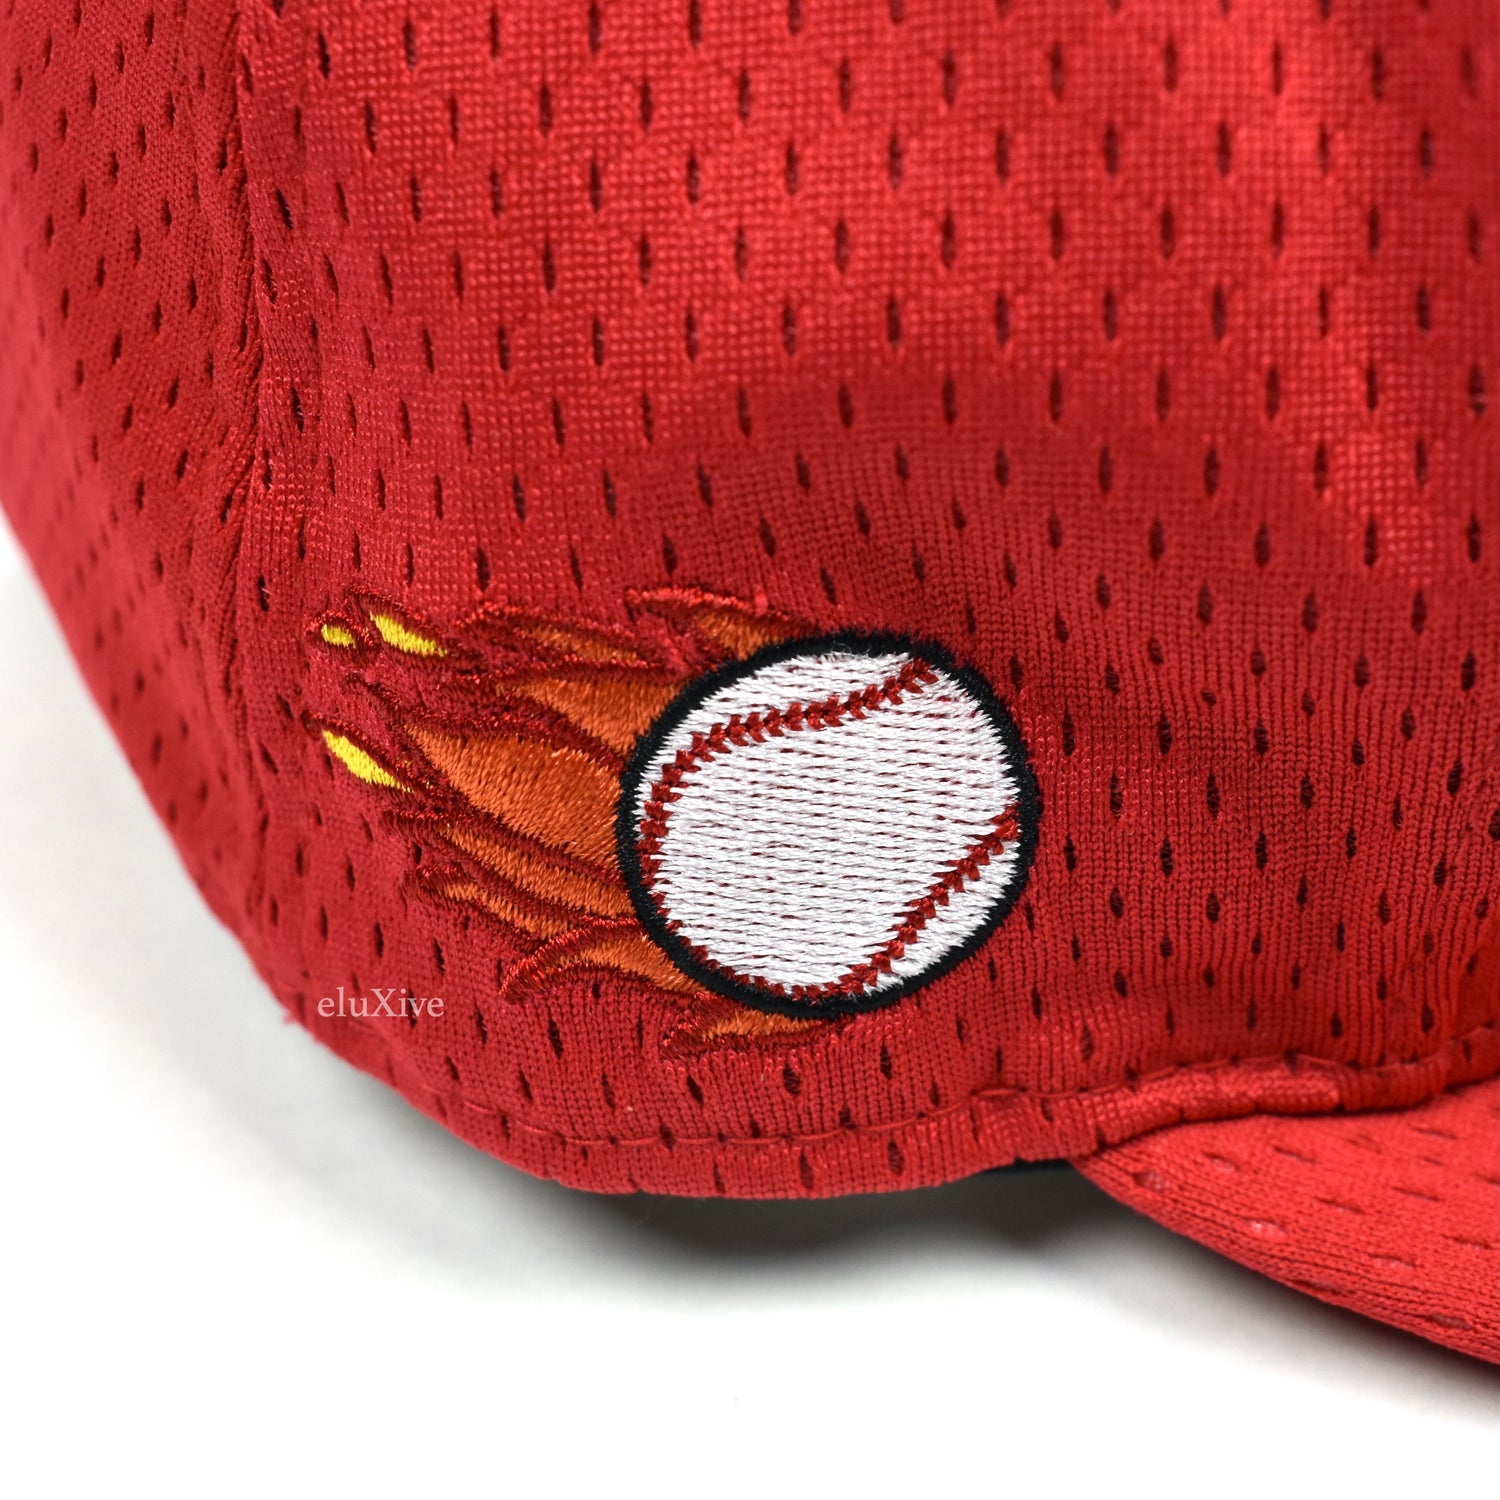 NEW 2018 Supreme SS18 Box Logo Red Monogram New Era Hat S 7 5/8